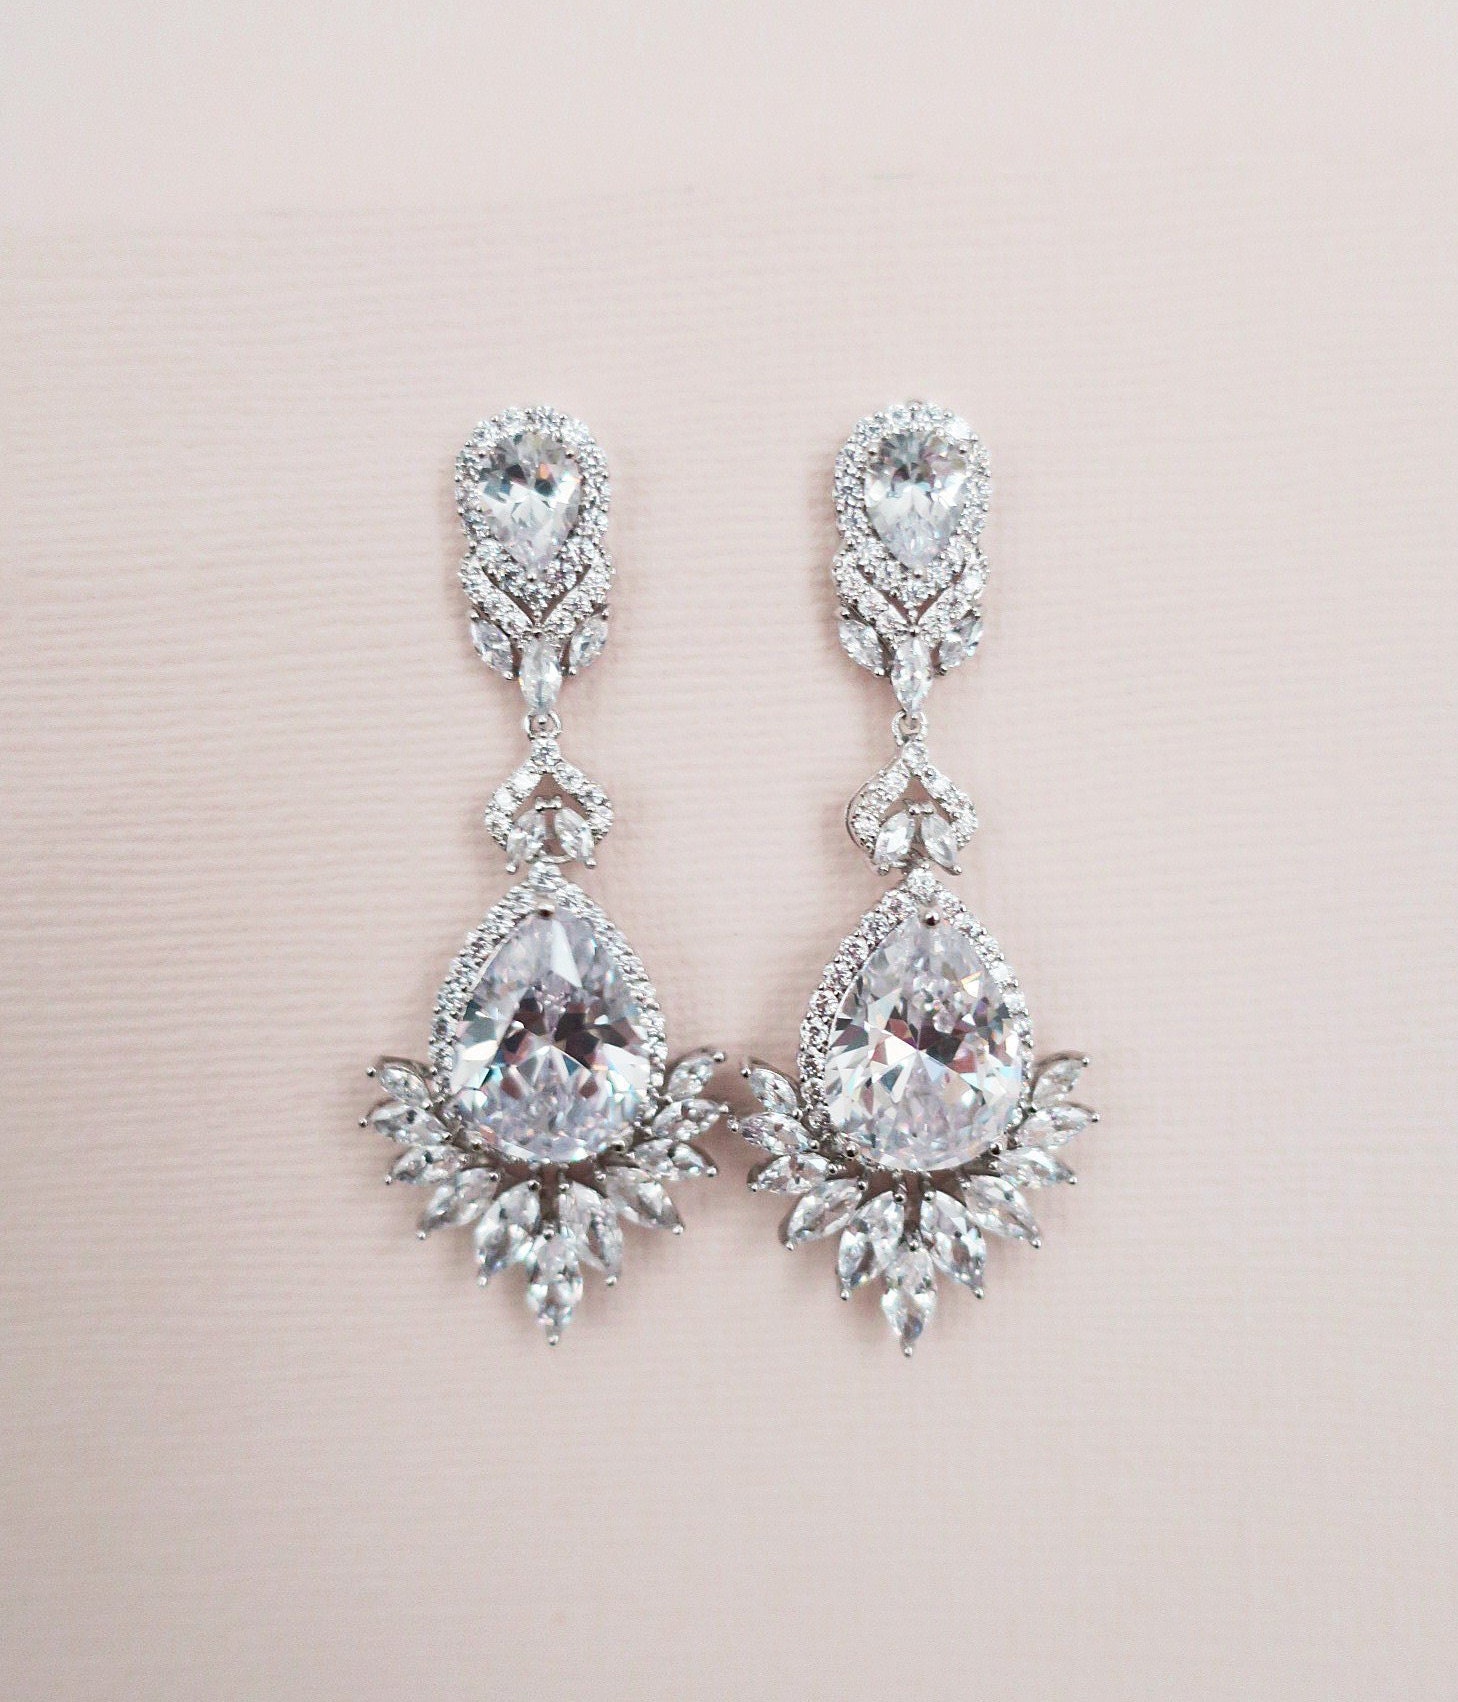 Crystal Bridal Earrings Wedding Jewelry Chandelier Wedding | Etsy